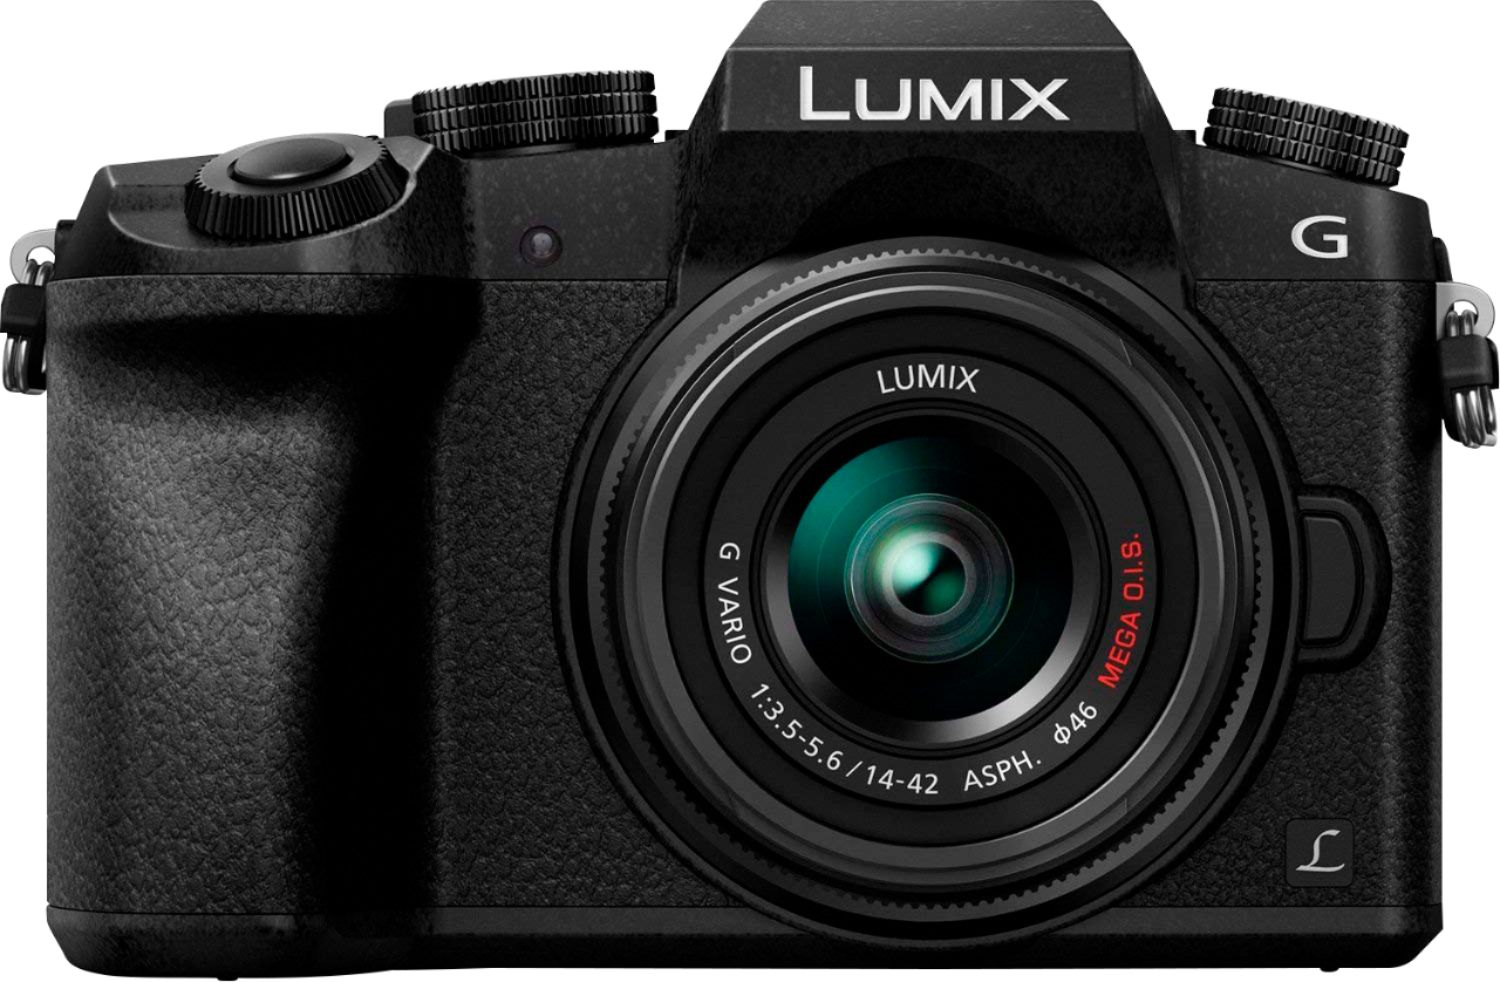 Panasonic - LUMIX G7 Mirrorless 4K Photo Digital Camera Body with 14-42mm f3.5-5.6 II Lens - Black